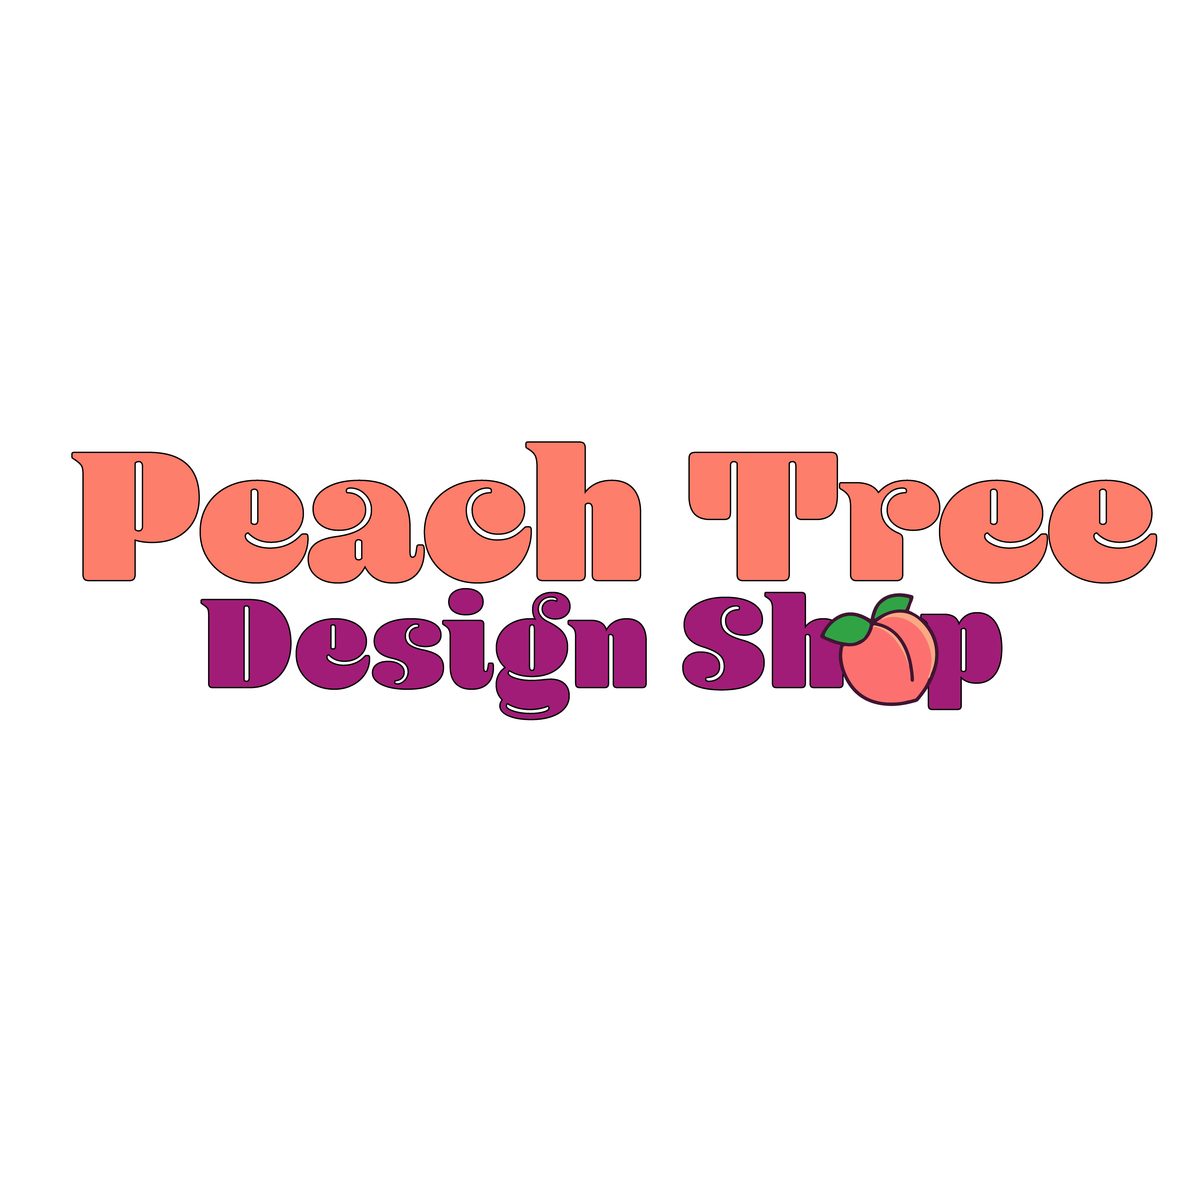 Peach Tree Design Shop